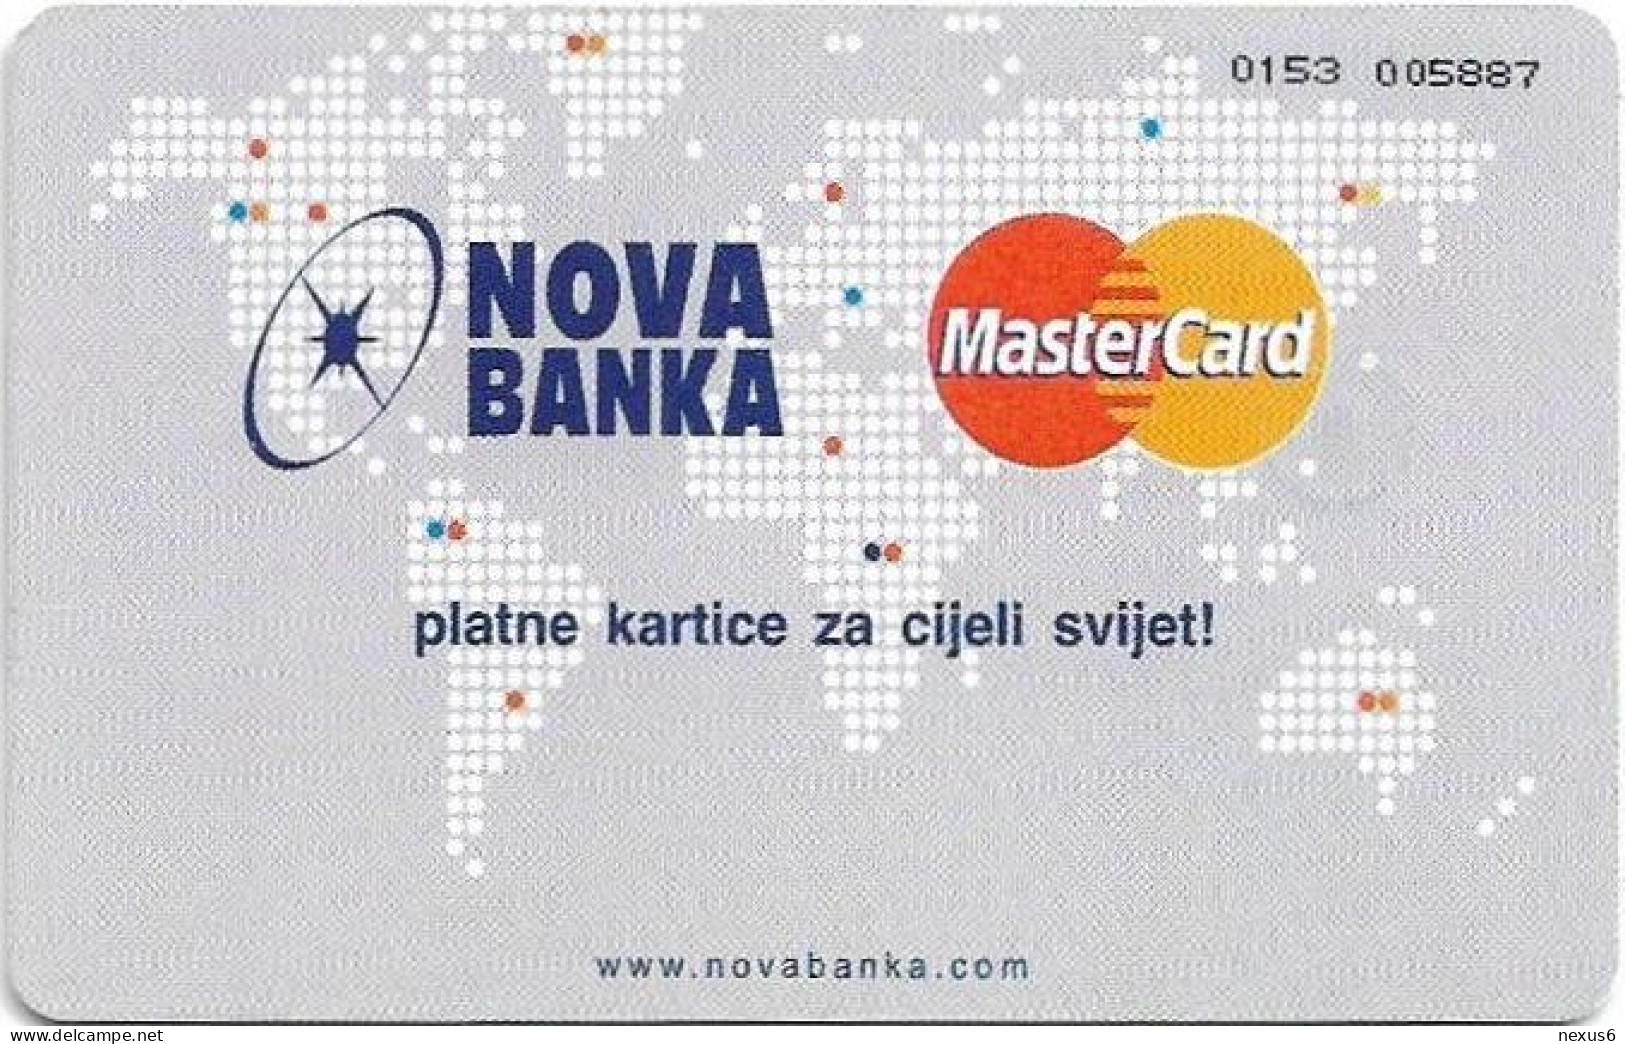 Bosnia - Republika Srpska - Nova Banka - Mastercard 1, Gem5 Red, 01.2005, 150Units, Used - Bosnia